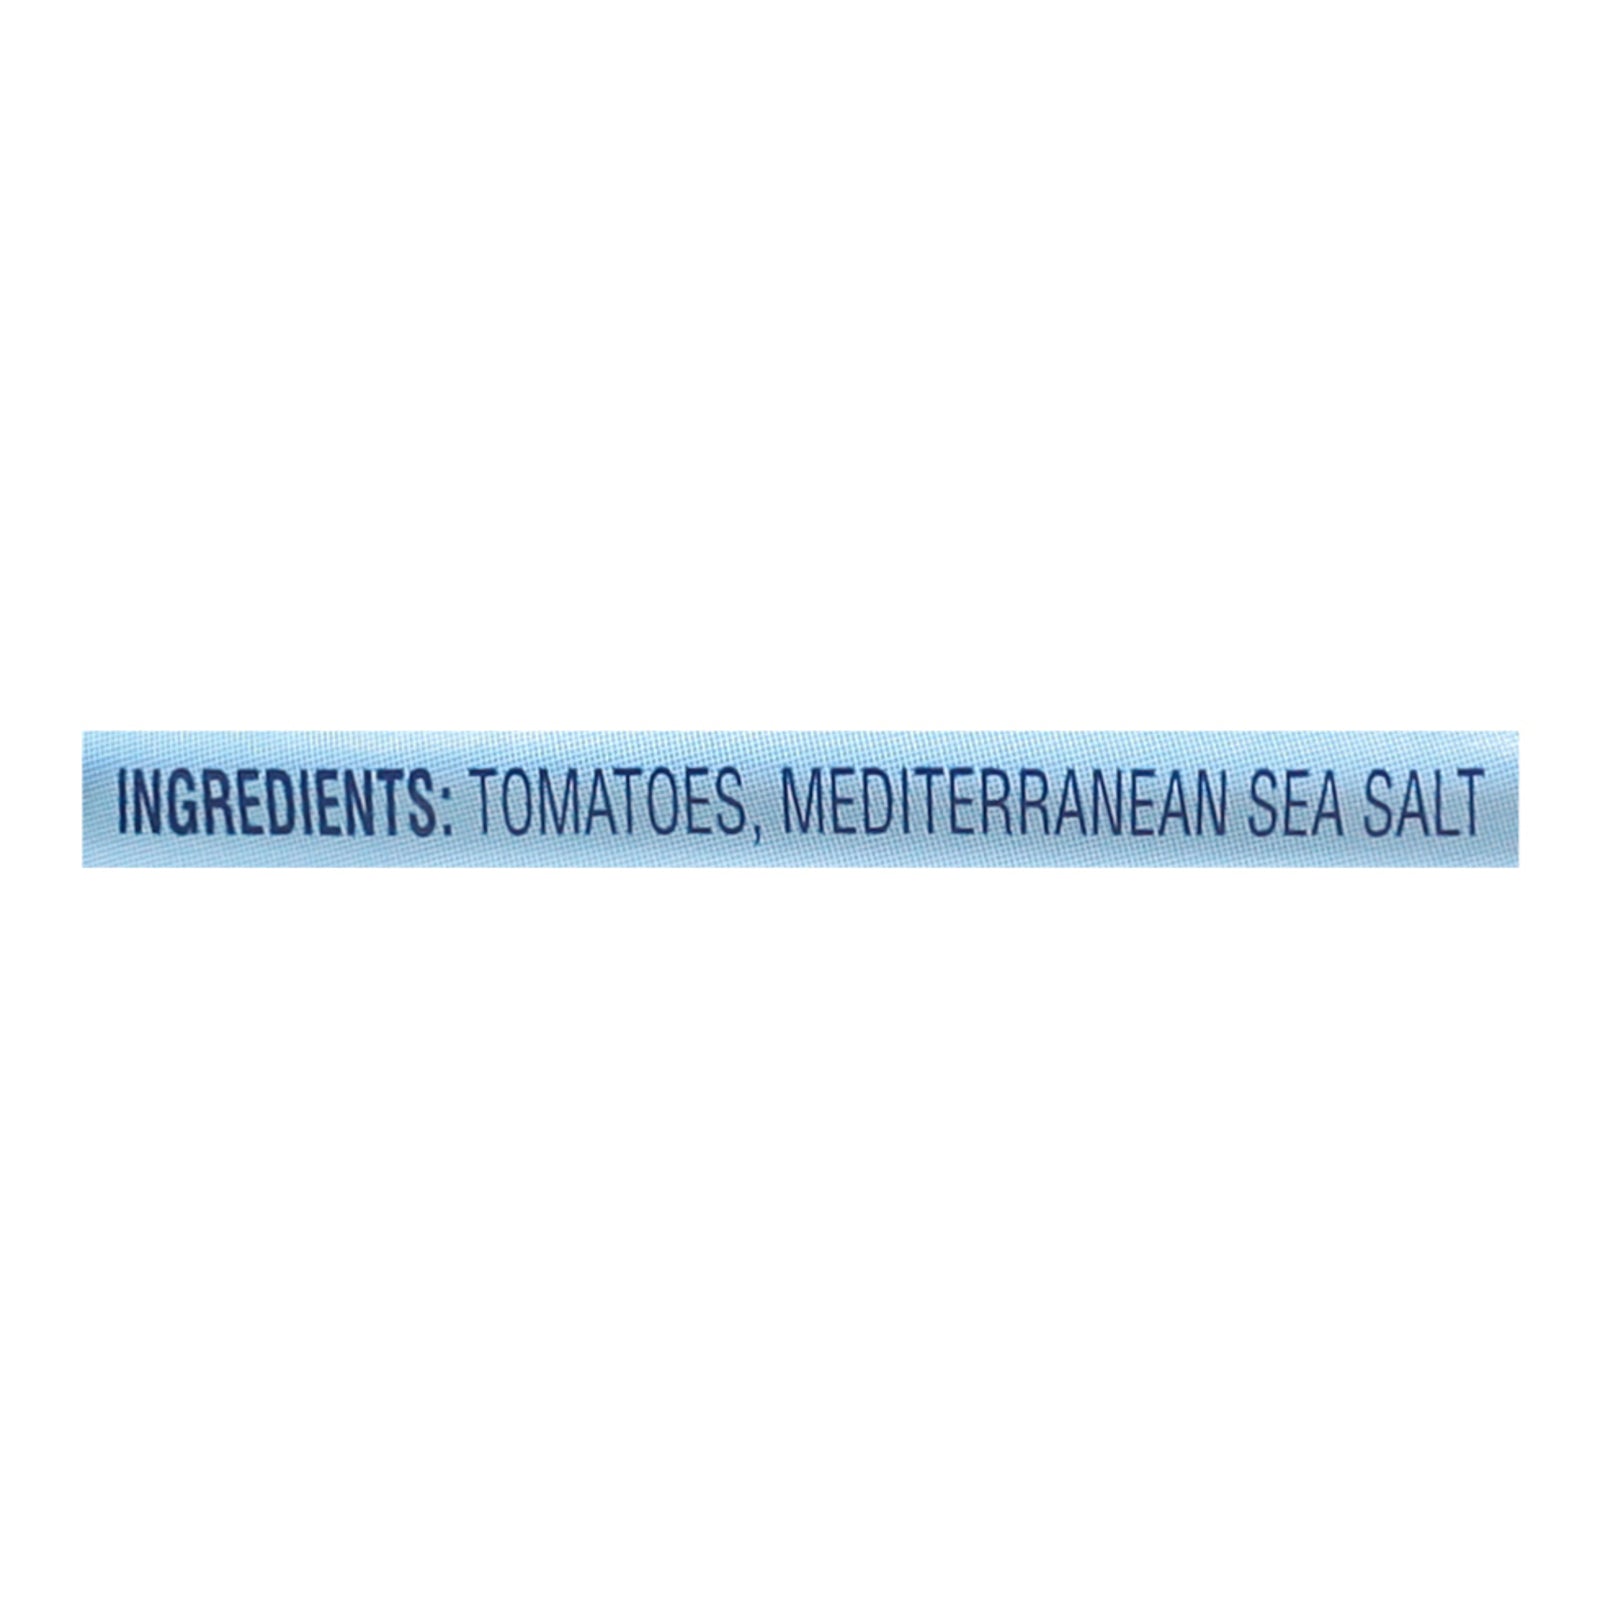 Mutti - Crushed Tomatoes (polpa) - Case of 6-27.9 OZ